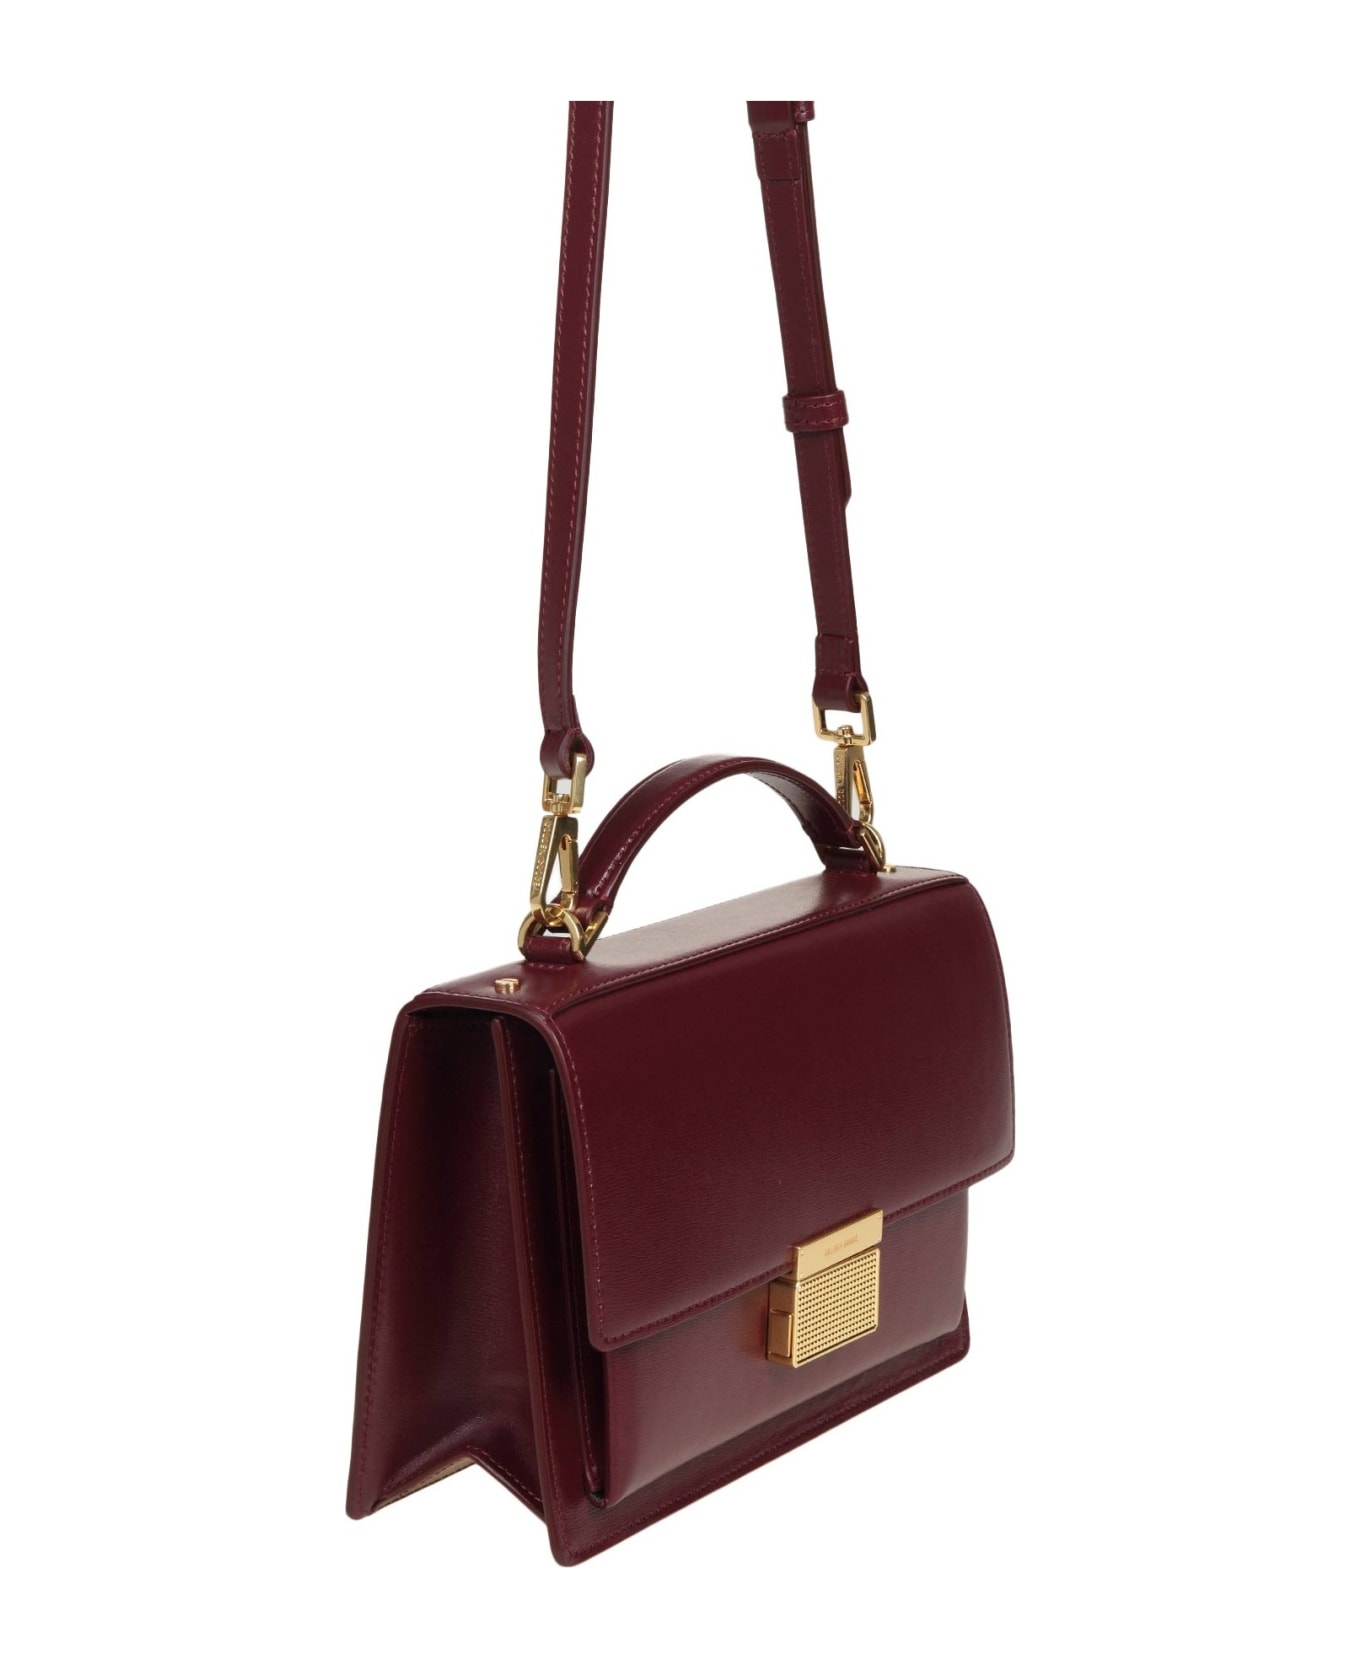 Golden Goose Venezia Handbag In Bordeaux Leather - Burgundy